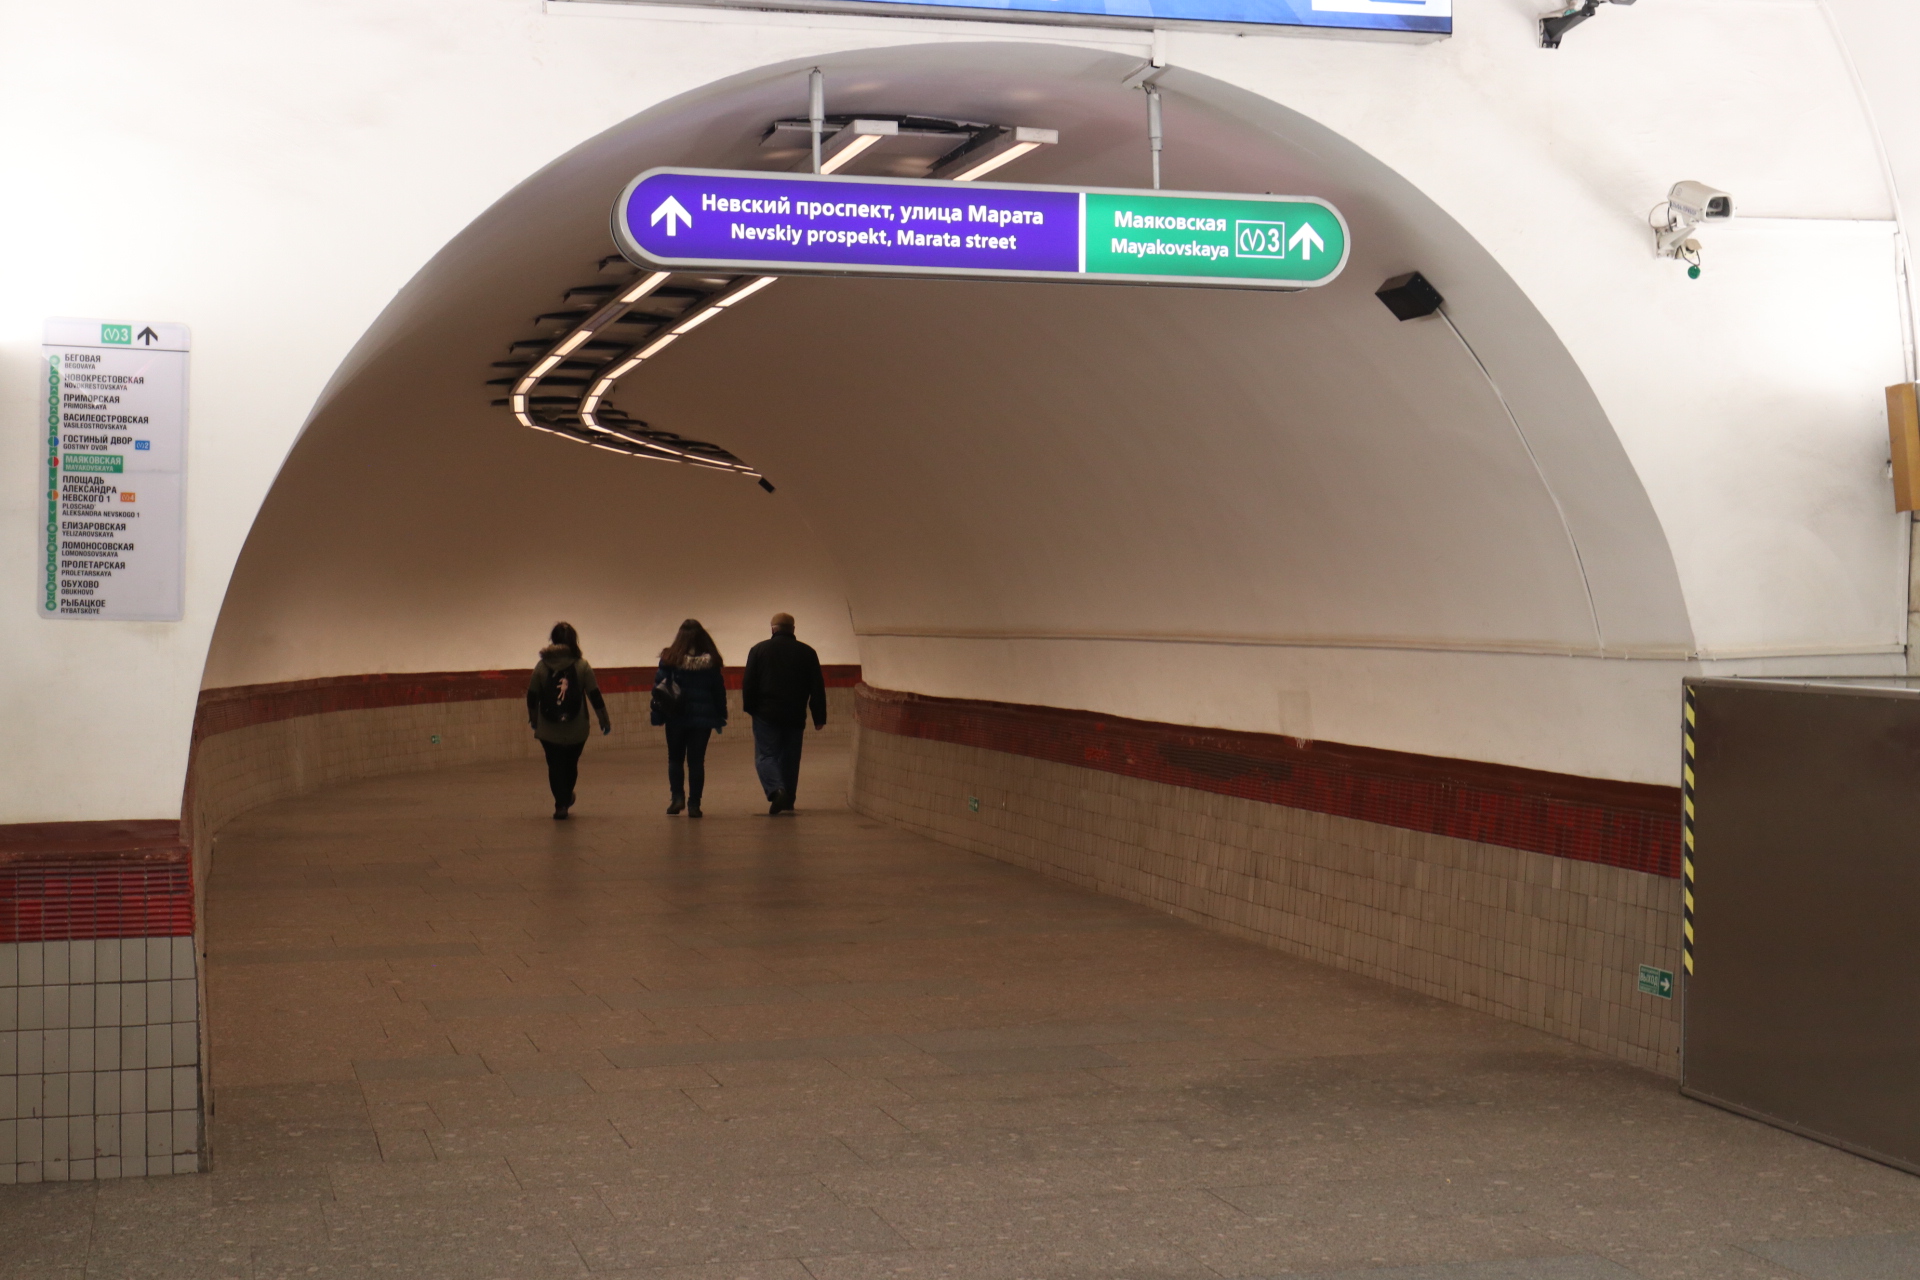 станция метро маяковская санкт петербург